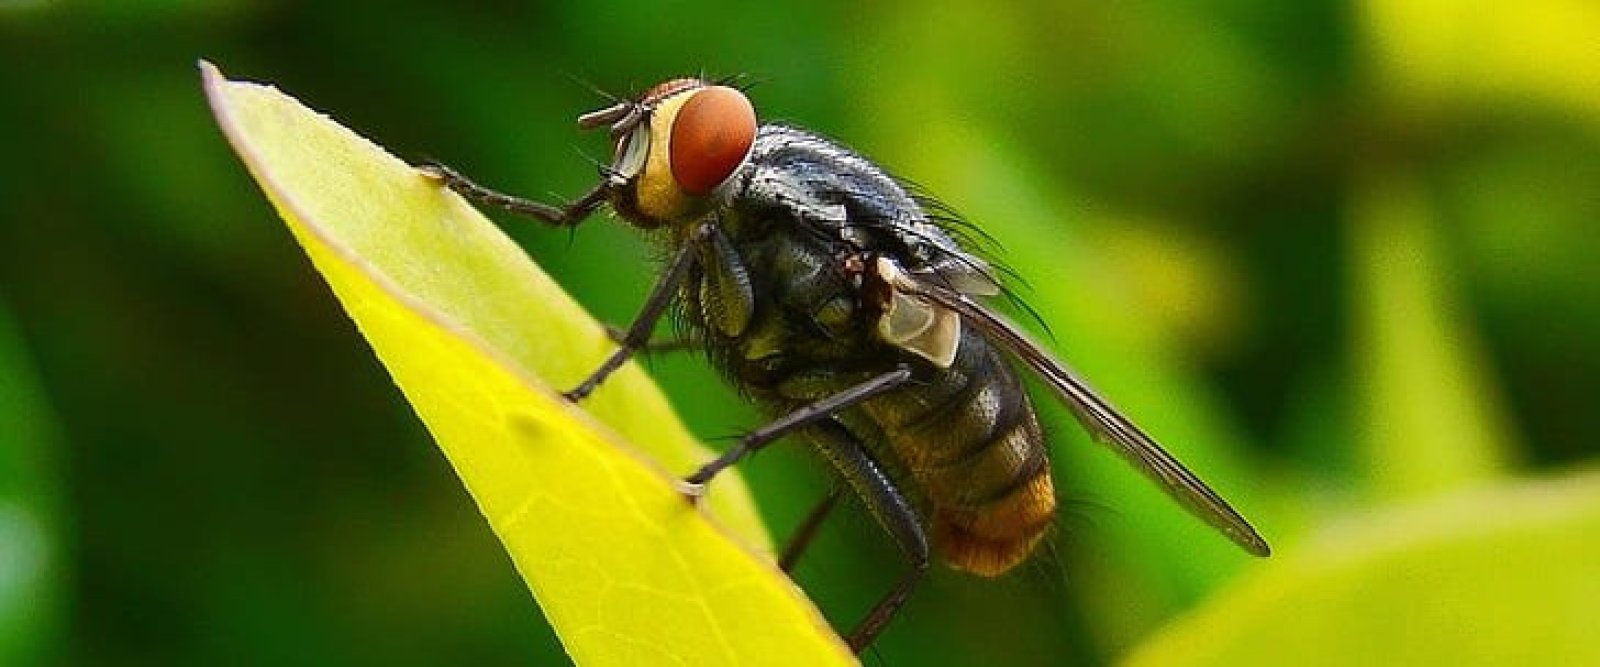 Encuentran una mosca intacta en intestino de un hombre tras un examen de rutina